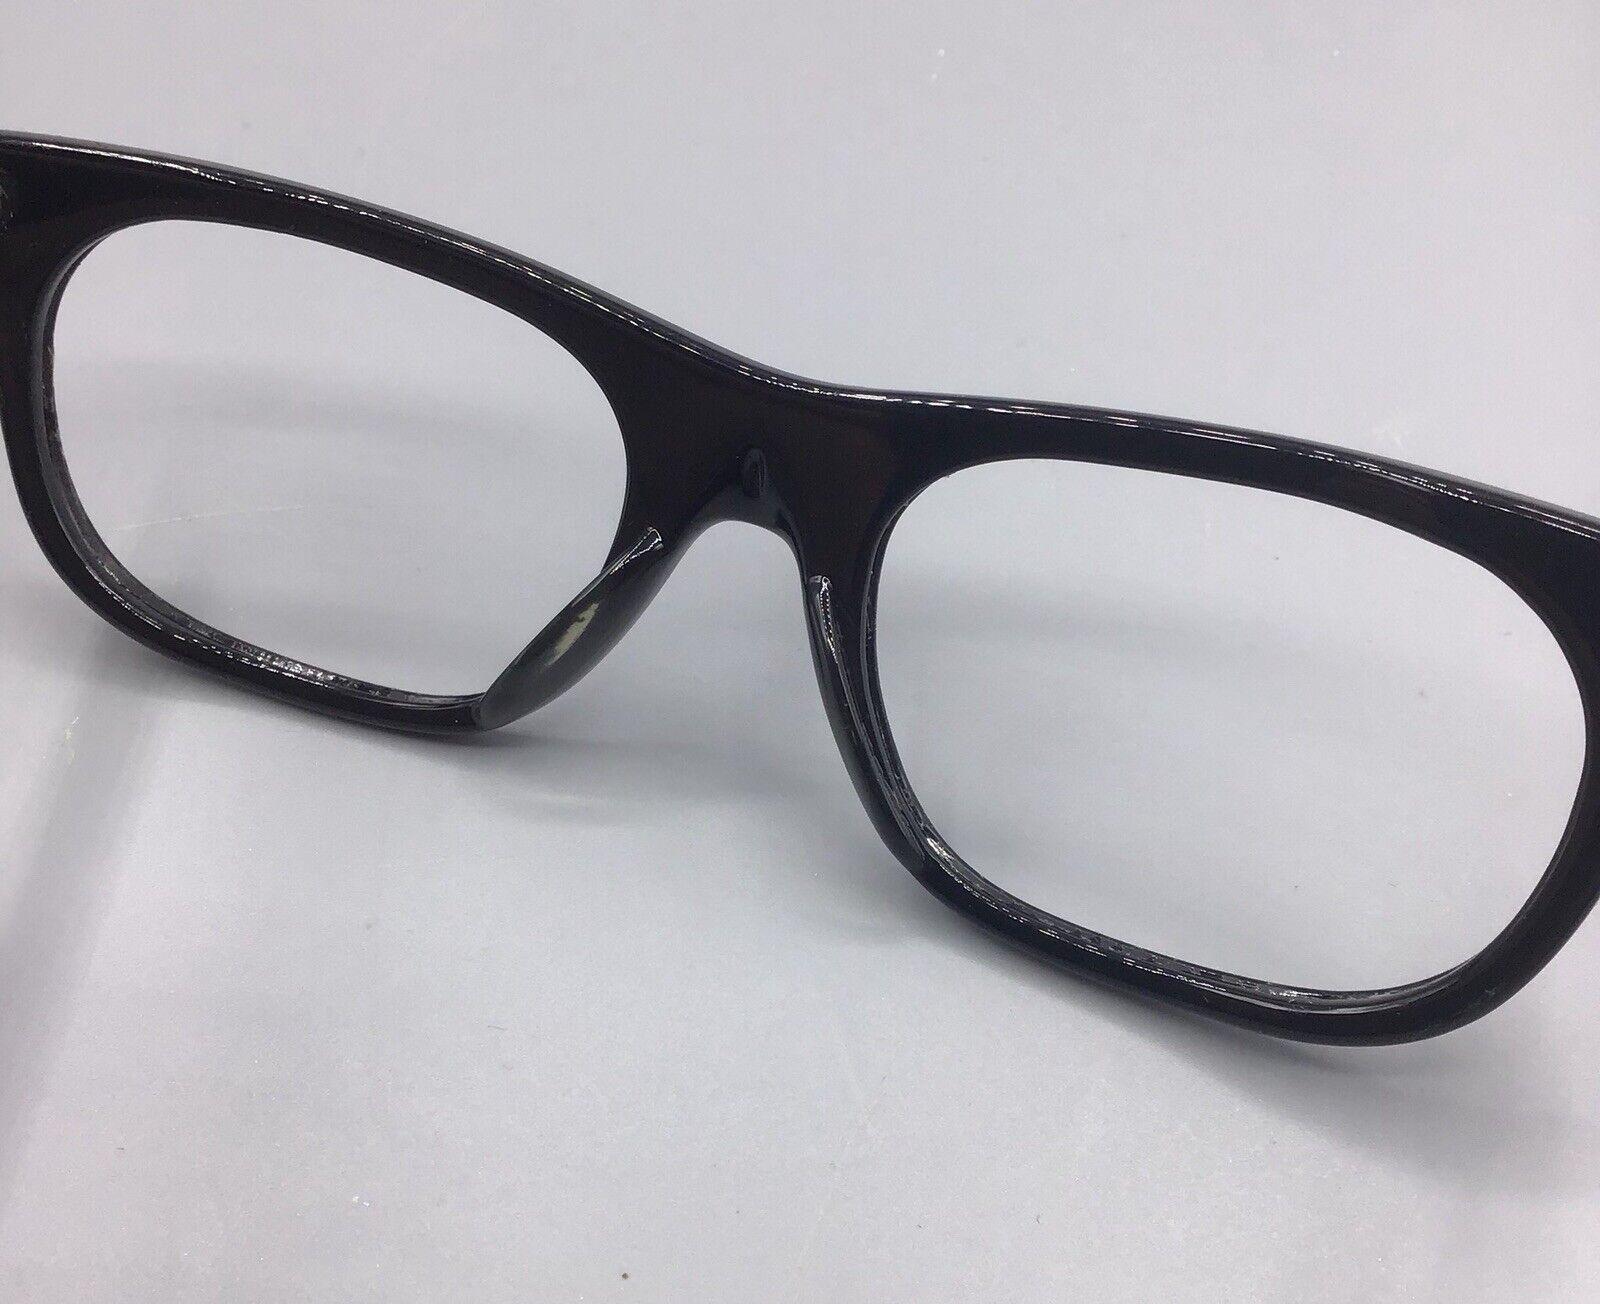 Fiorucci Metalfex pav-4 occhiale vintage eyewear frame brillen lunettes